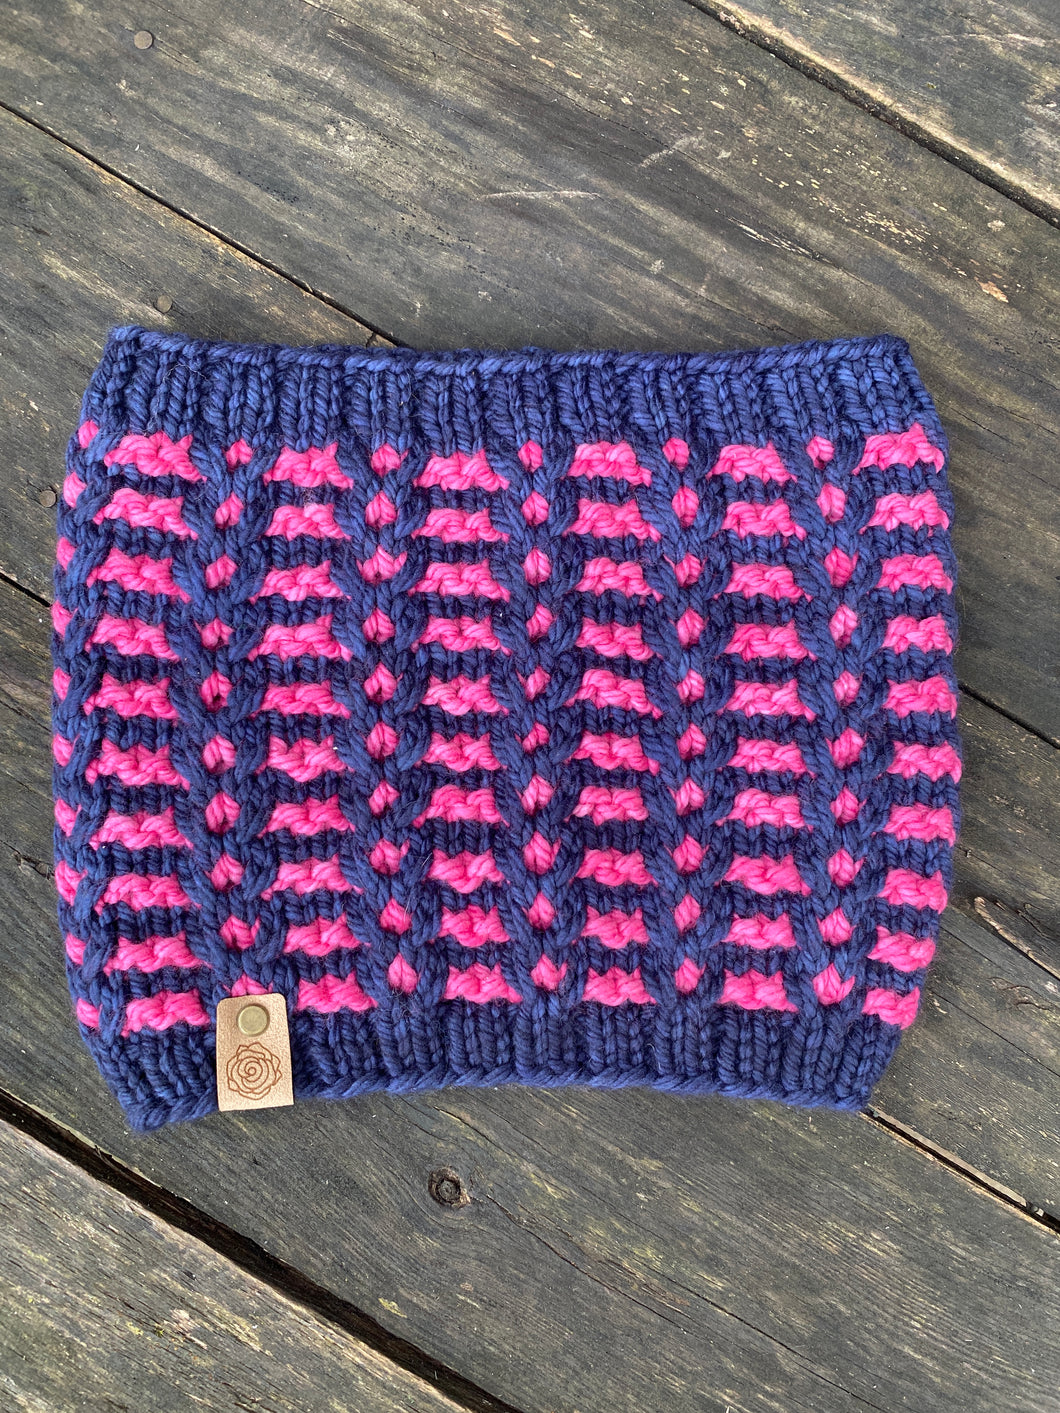 Luxury hand knit women's cowl neck warmer 100% merino wool hot pink navy